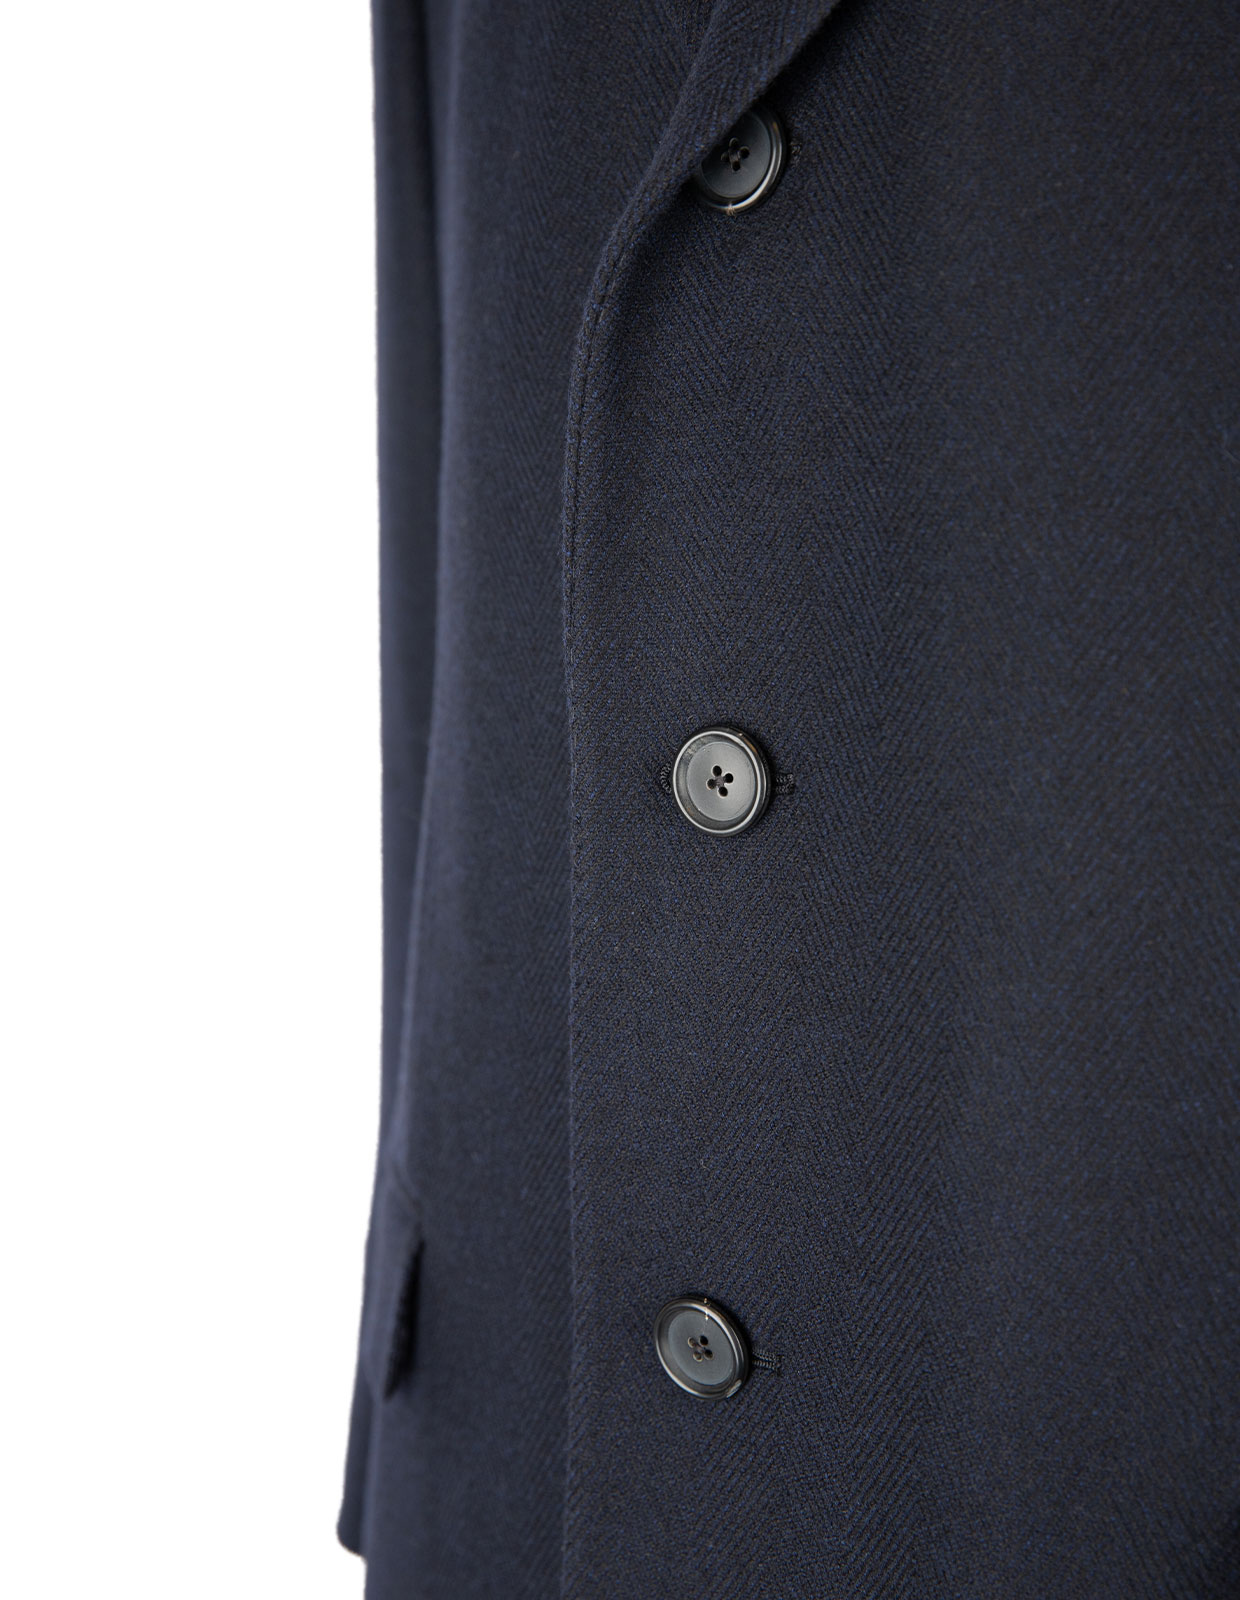 Aida Overcoat Wool & Cashmere Dark Blue Stl 48